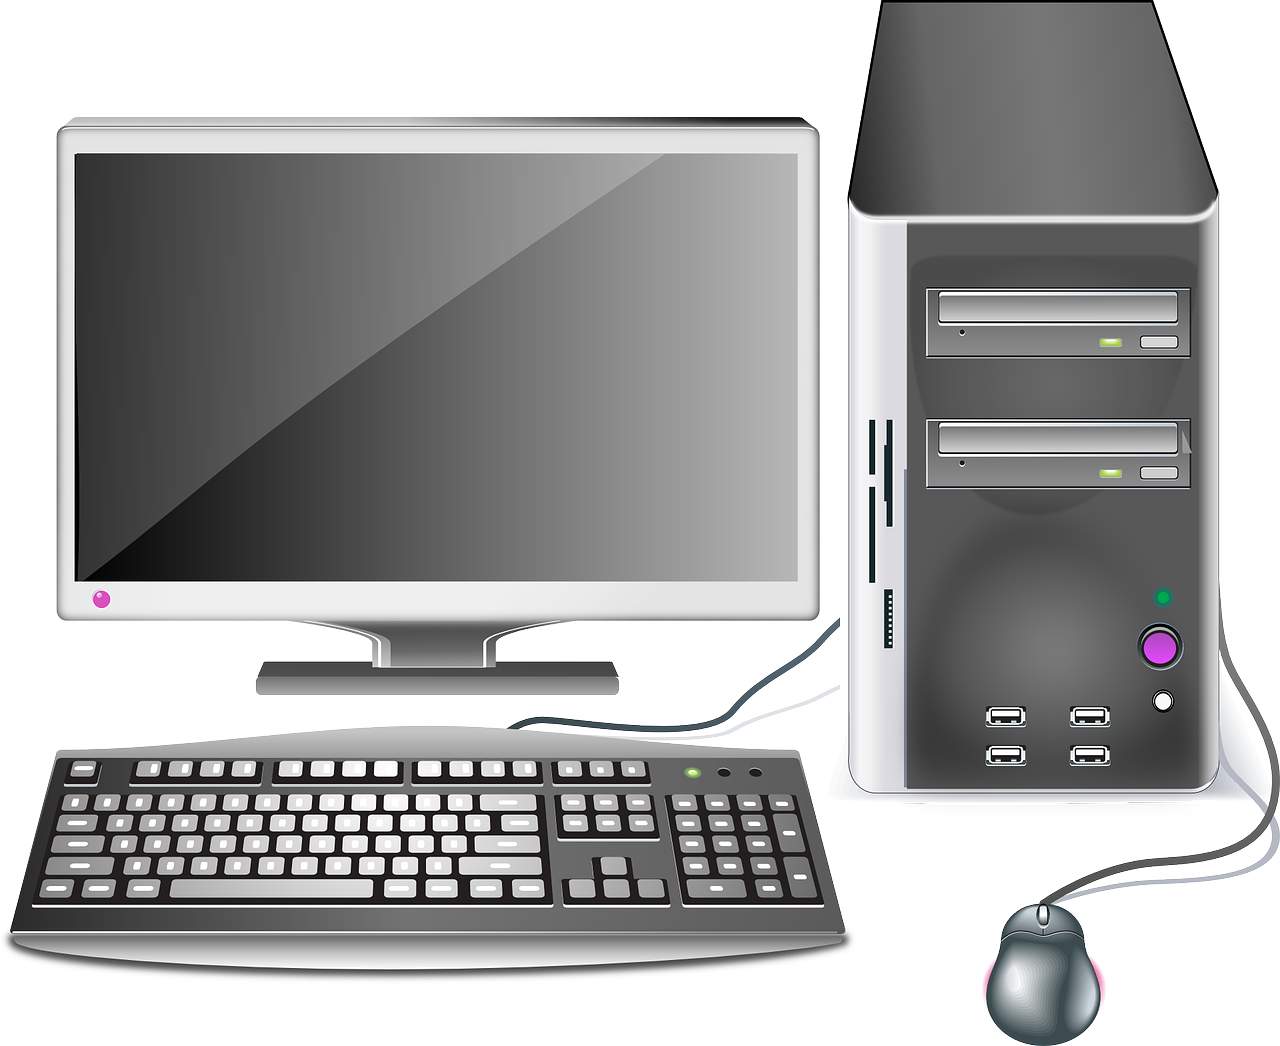 A desktop computer.